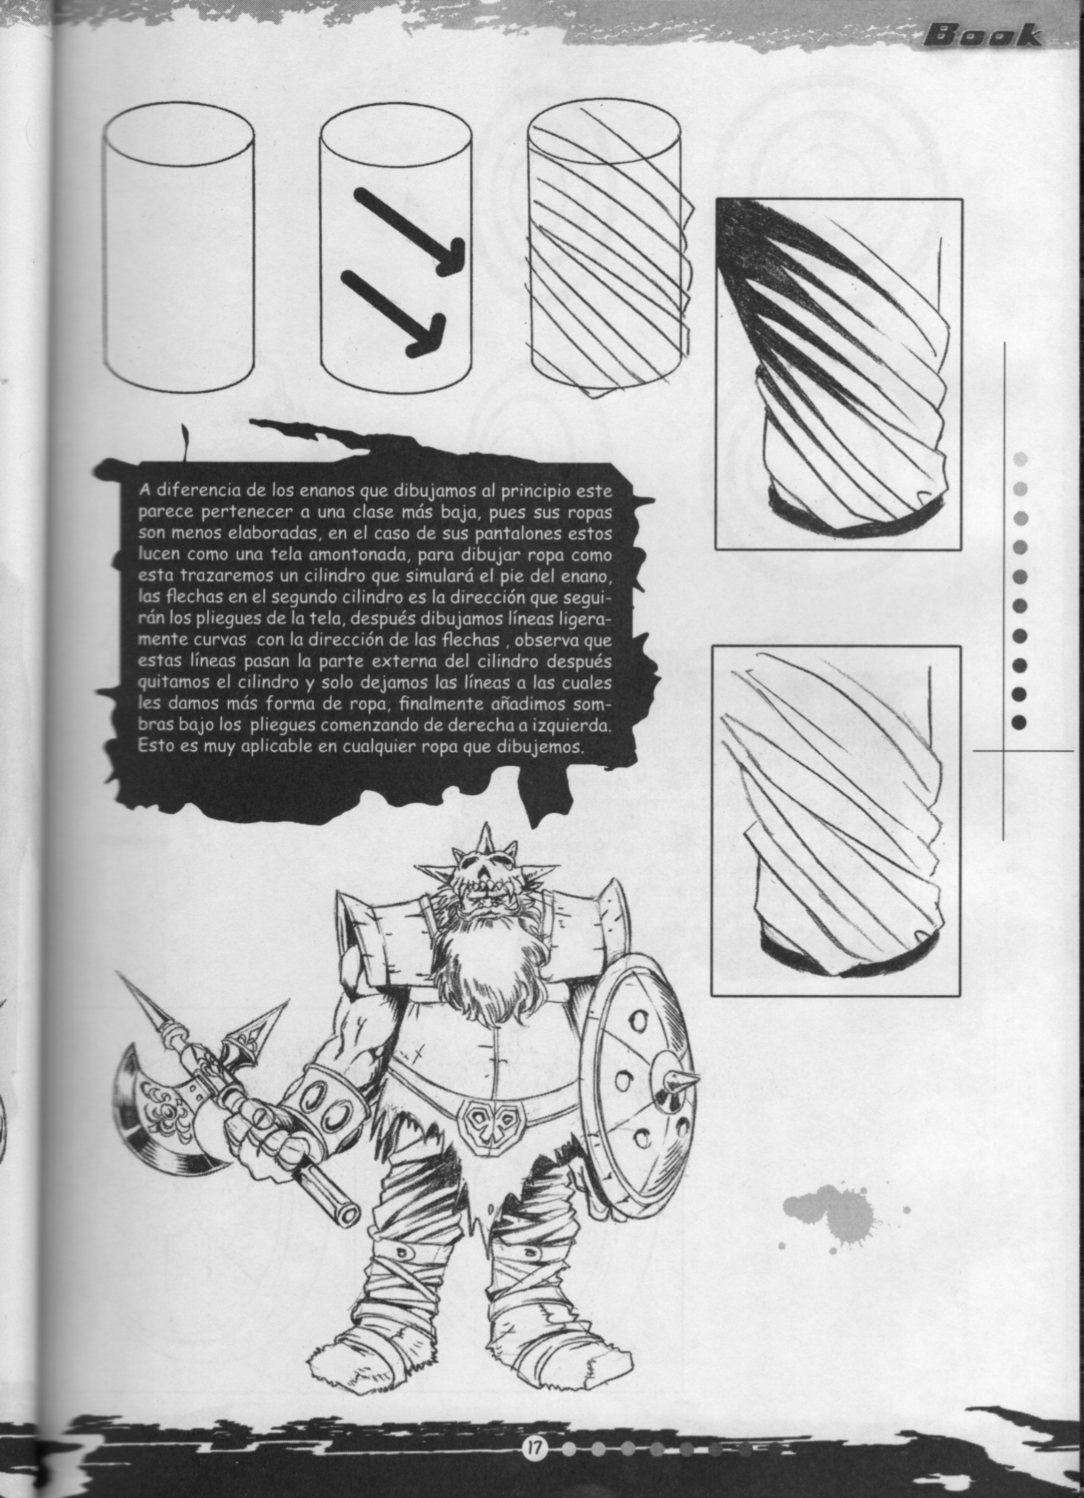 DibujArte Epecial Manga #18/20 - Armas armaduras y Personajes fantasticos [Spanish] 16